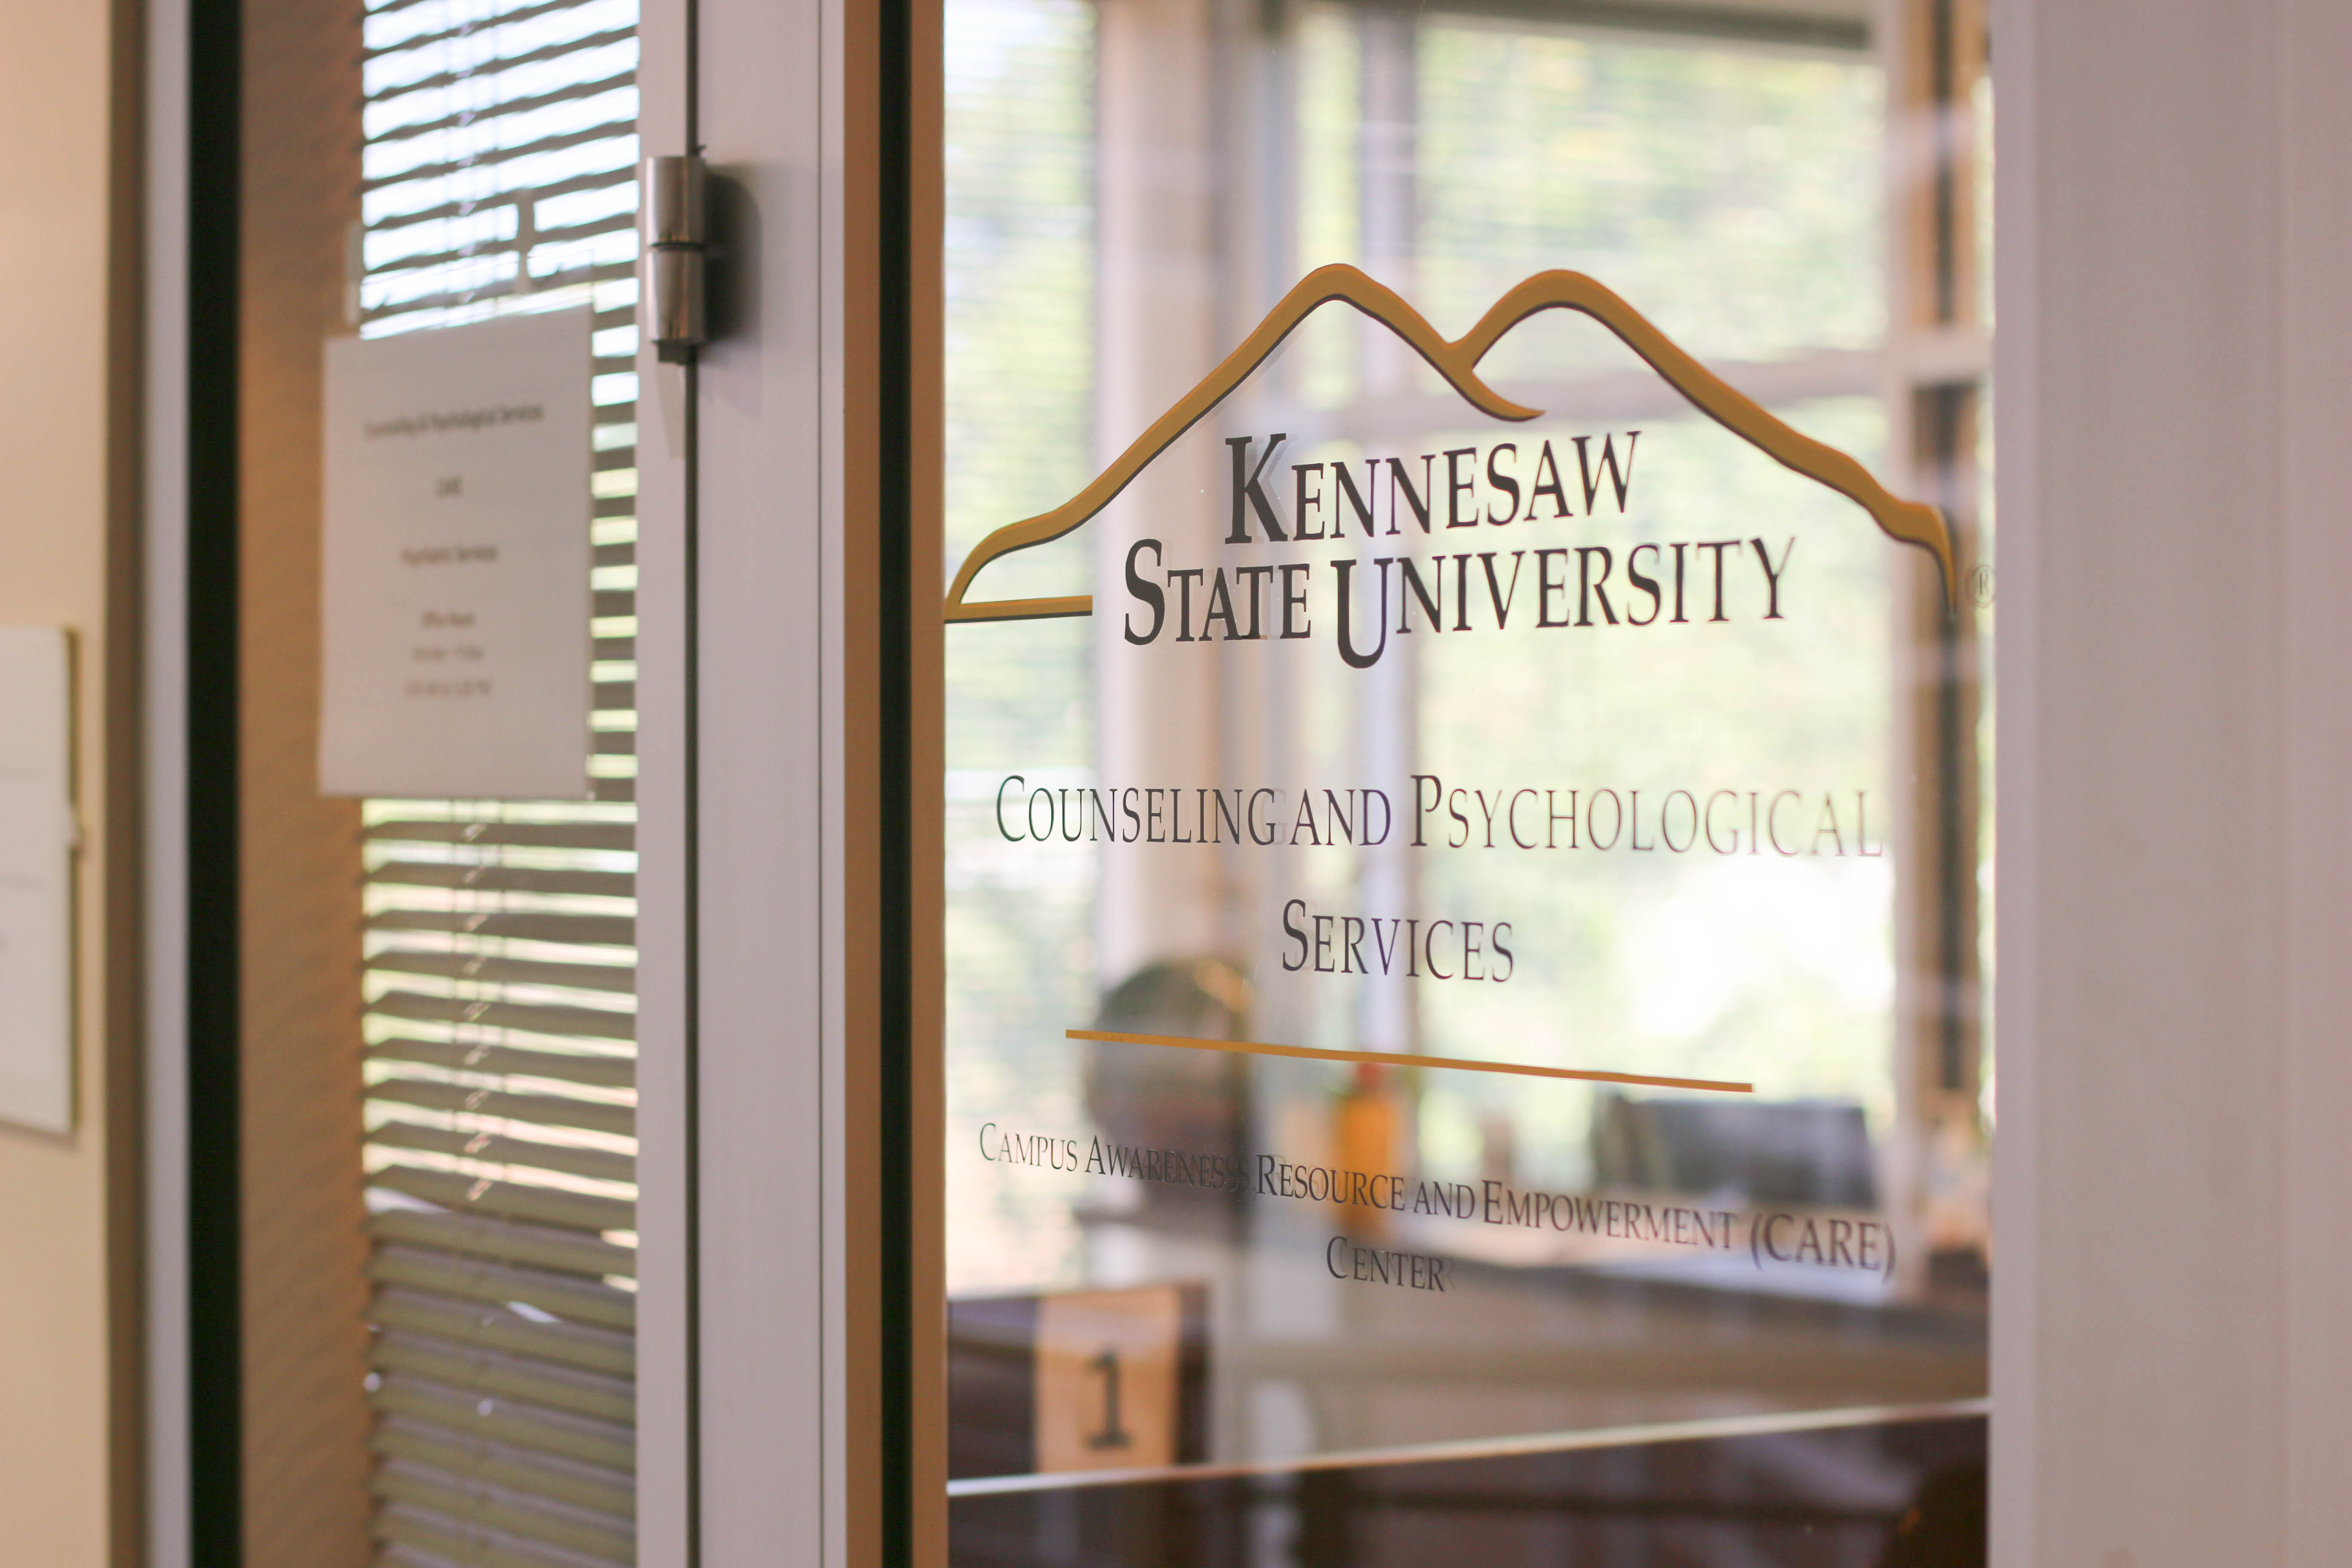 OPINION: KSU needs to hire more mental health counselors